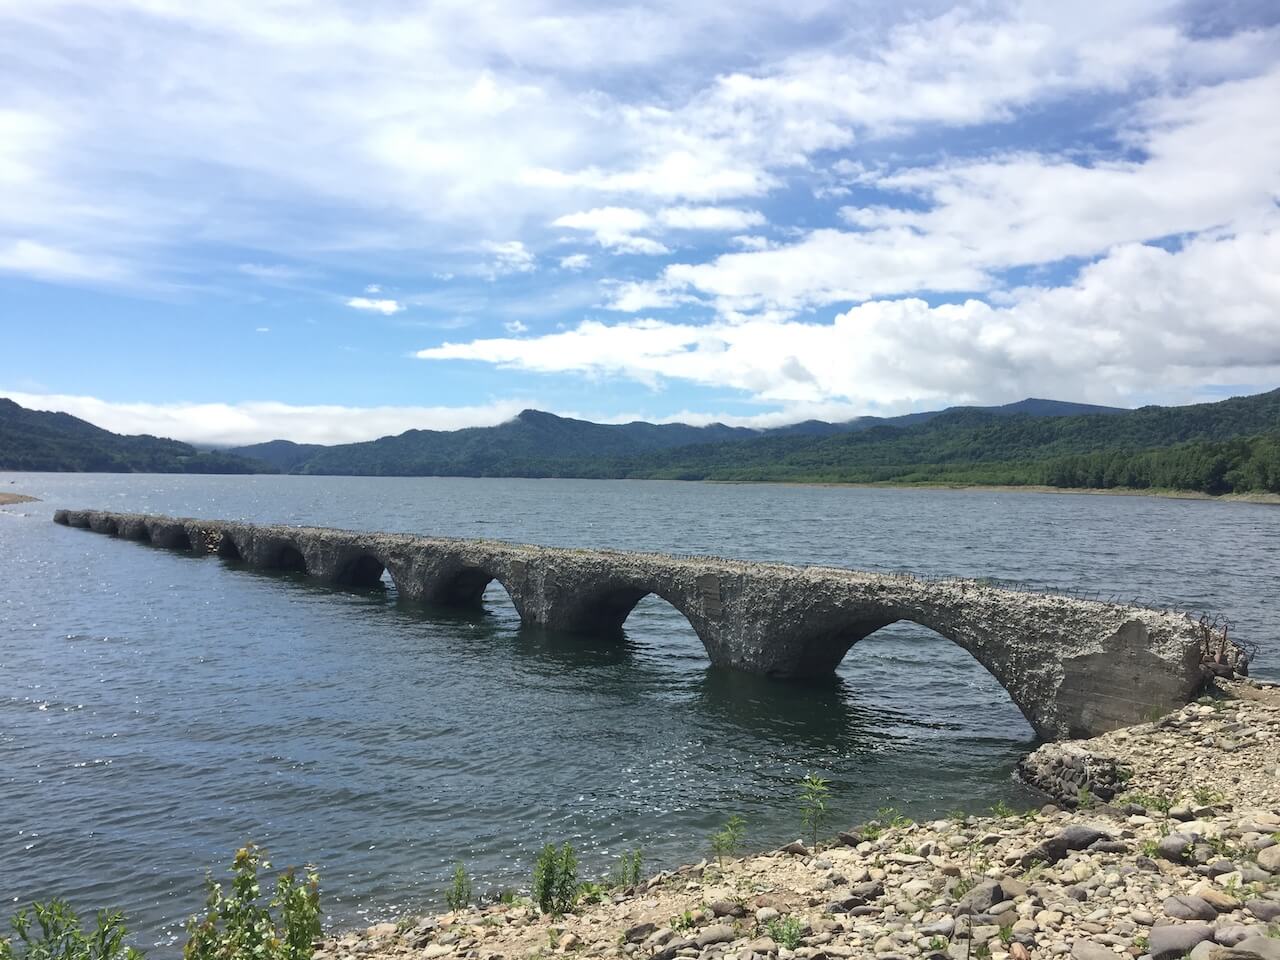 Taushubetsu River Bridge: A Concrete Arch Bridge That Stands the Test of Time